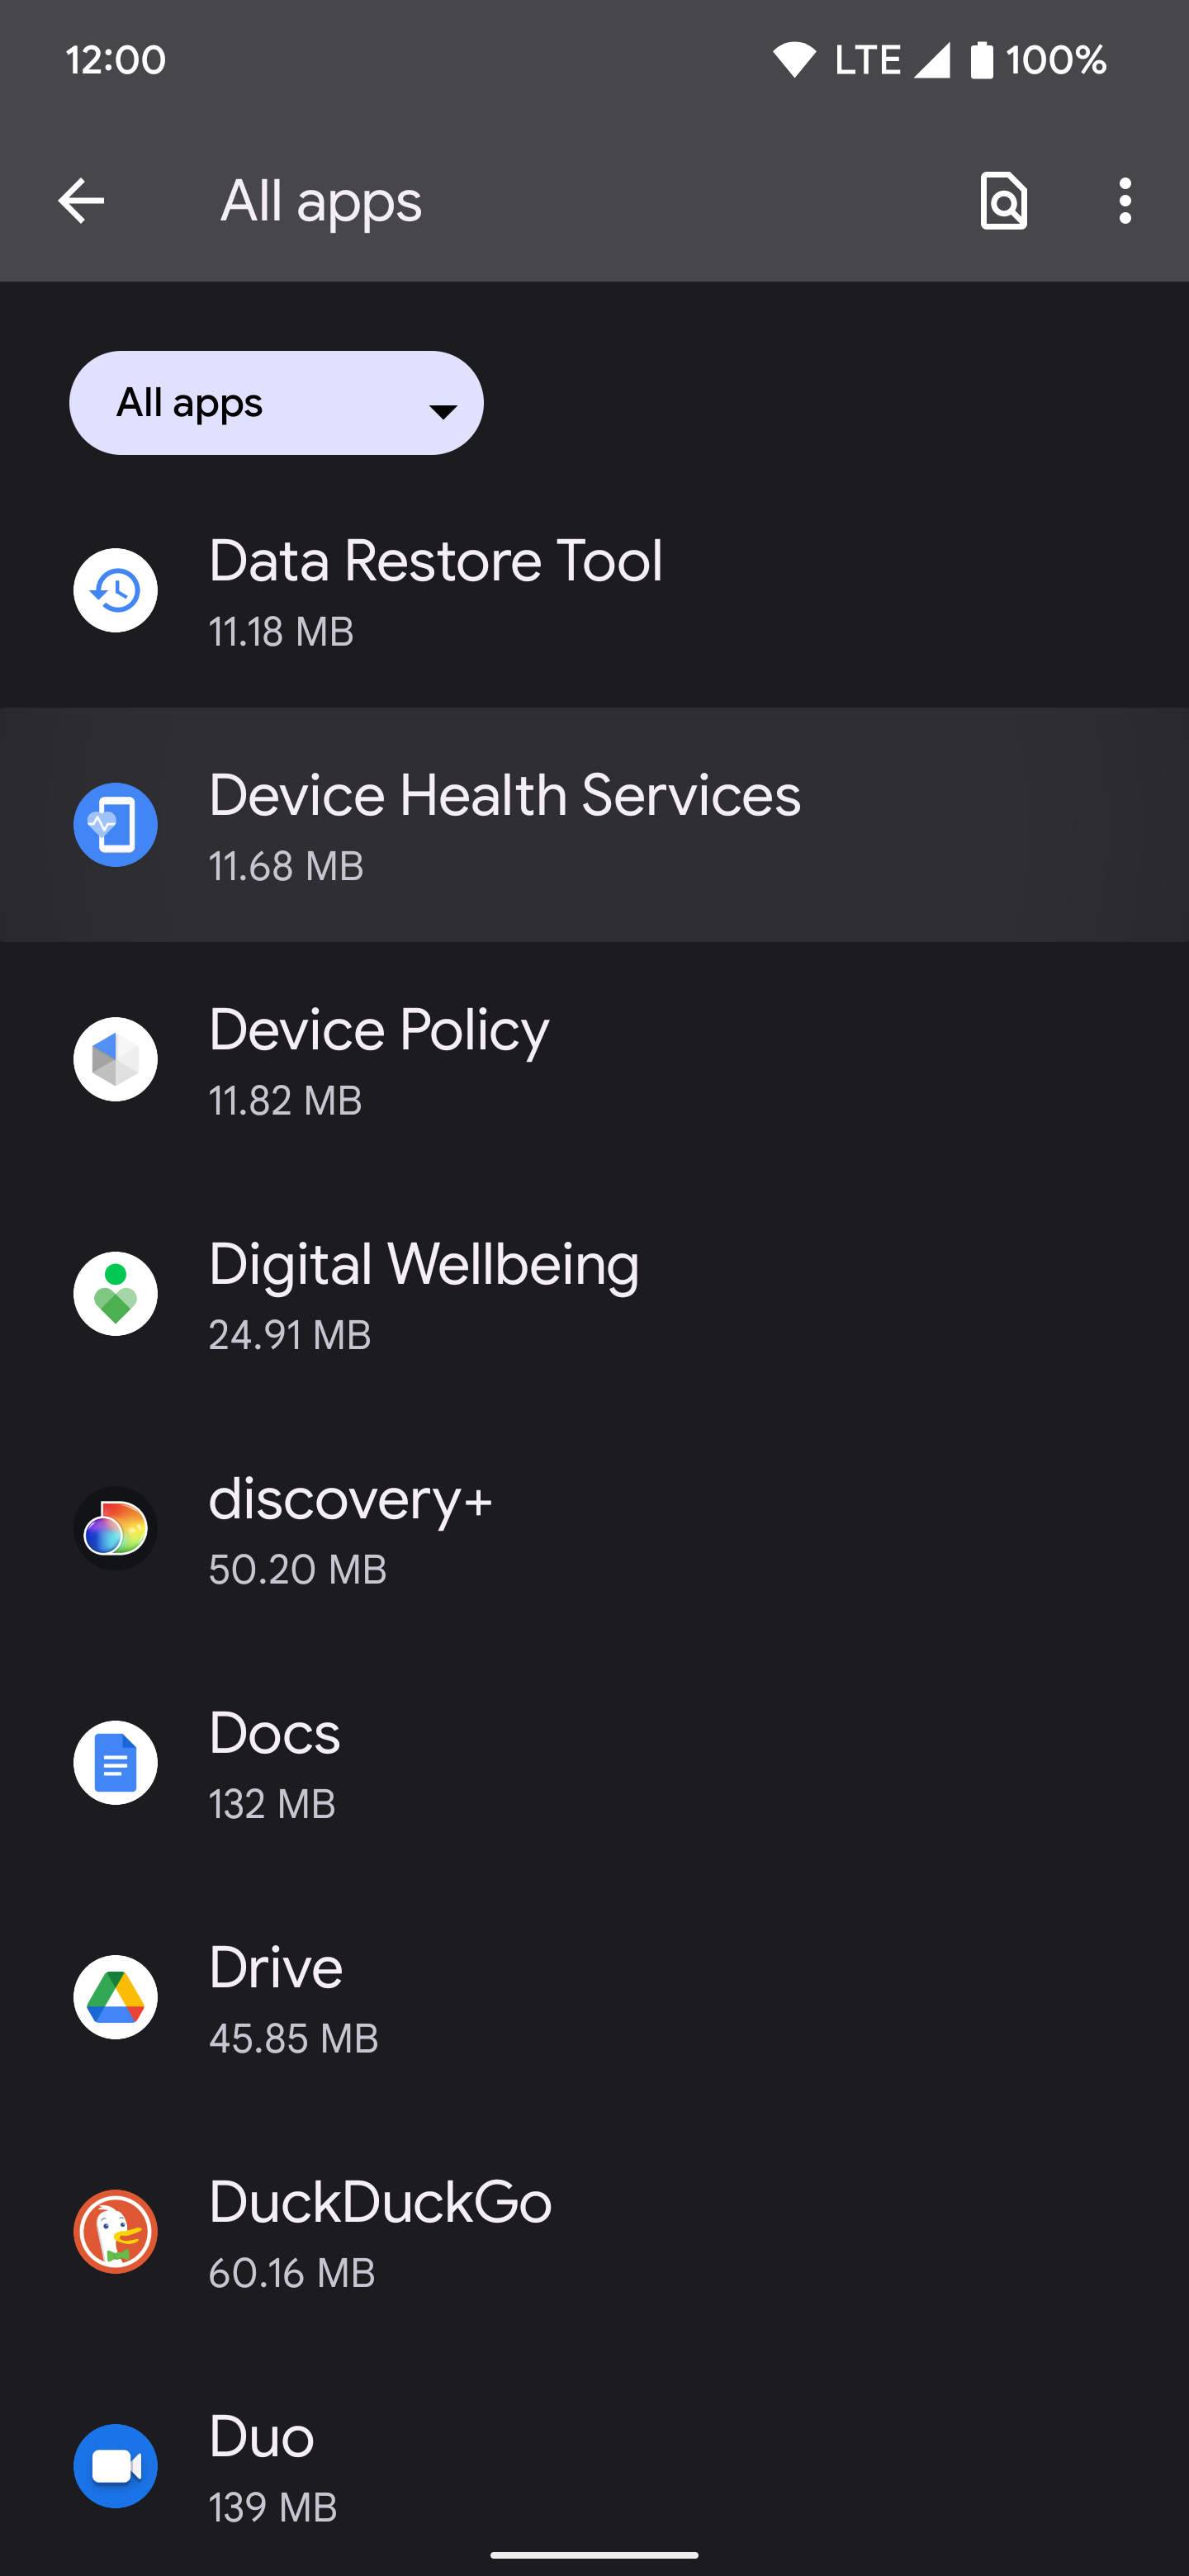 All apps menu on Google Pixel phone